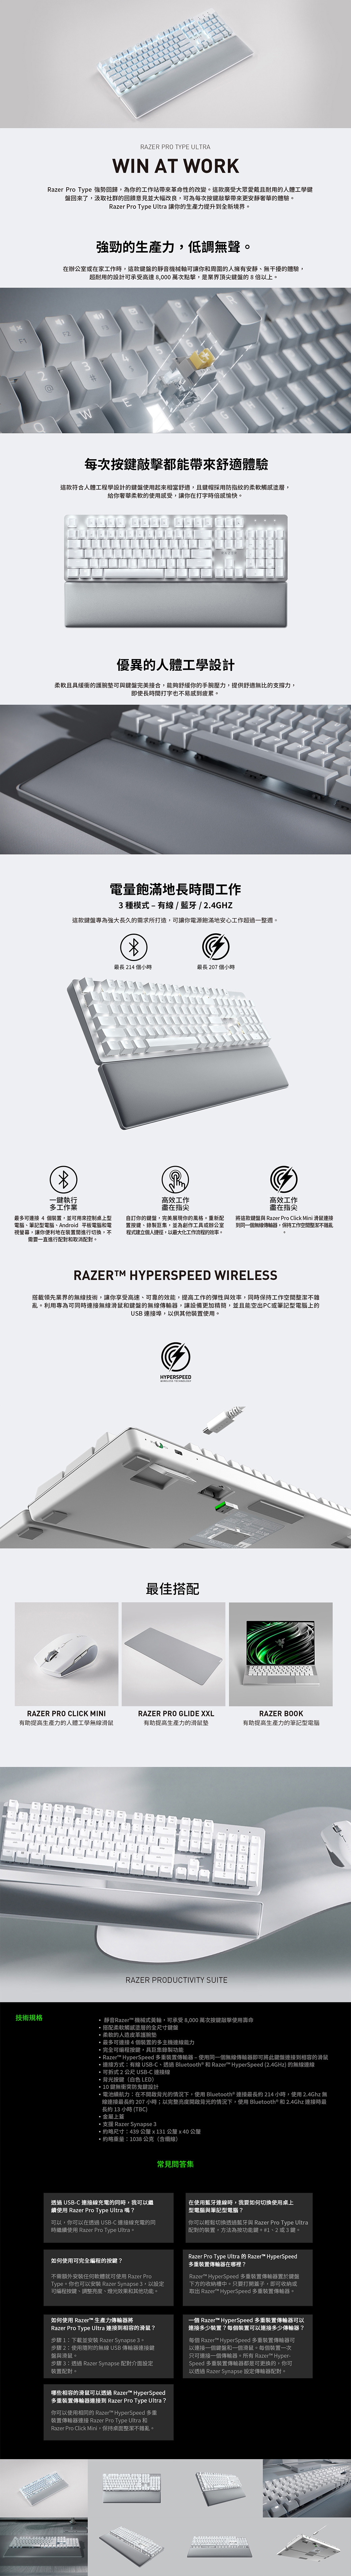 Razer Pro Type Ultra 無線藍牙雙模機械鍵盤(中文) - PChome 24h購物